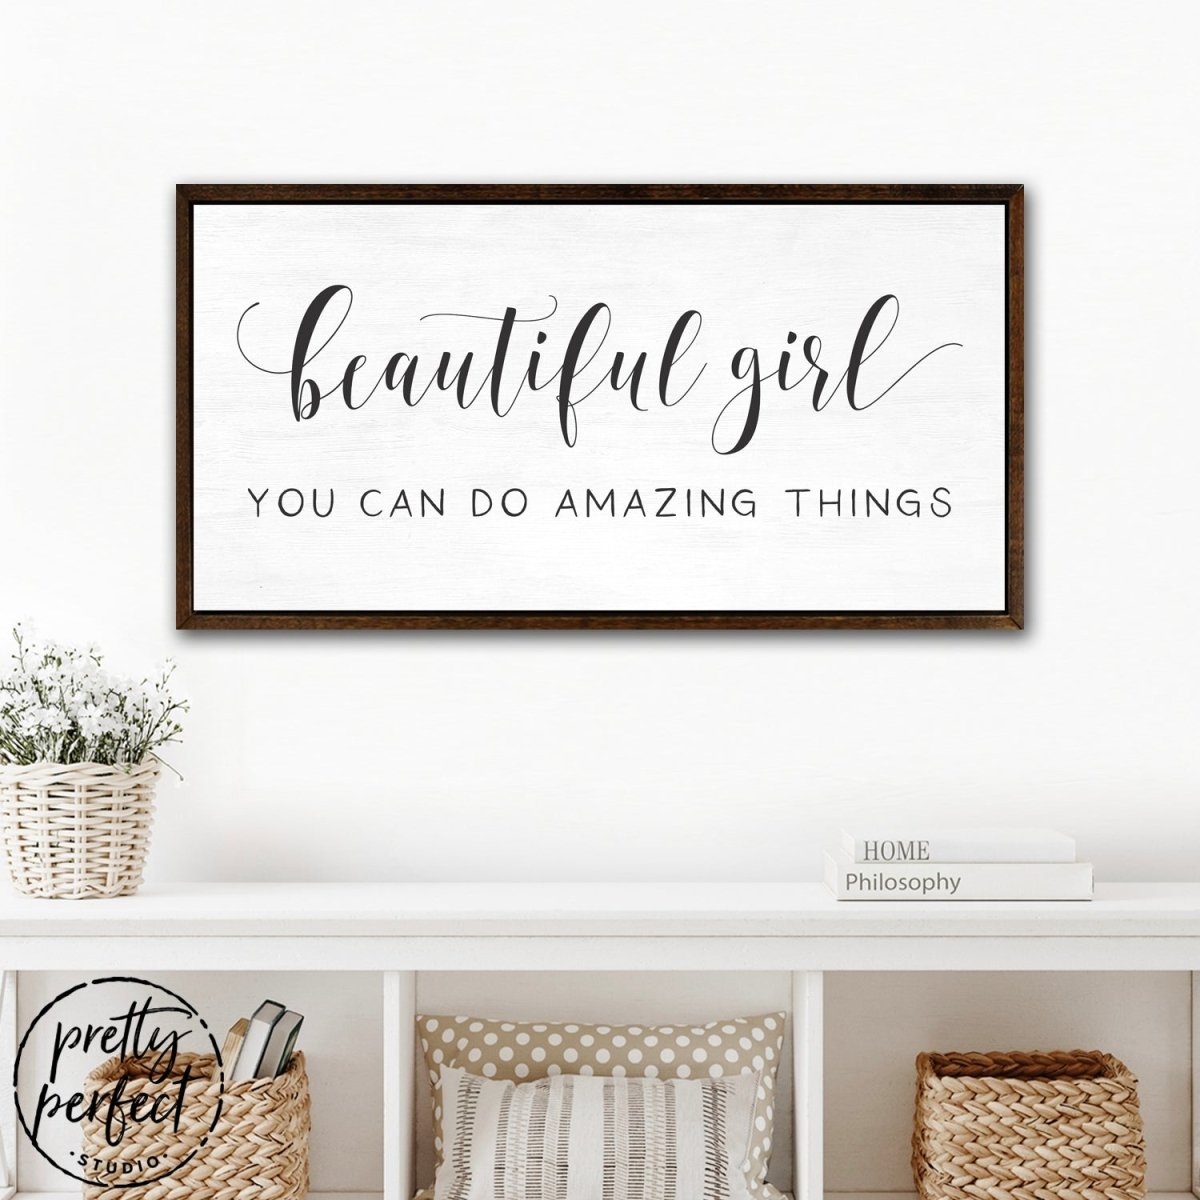 Beautiful Girl You Can Do Amazing Things Sign Hanging Above Shelf - Pretty Perfect Studio